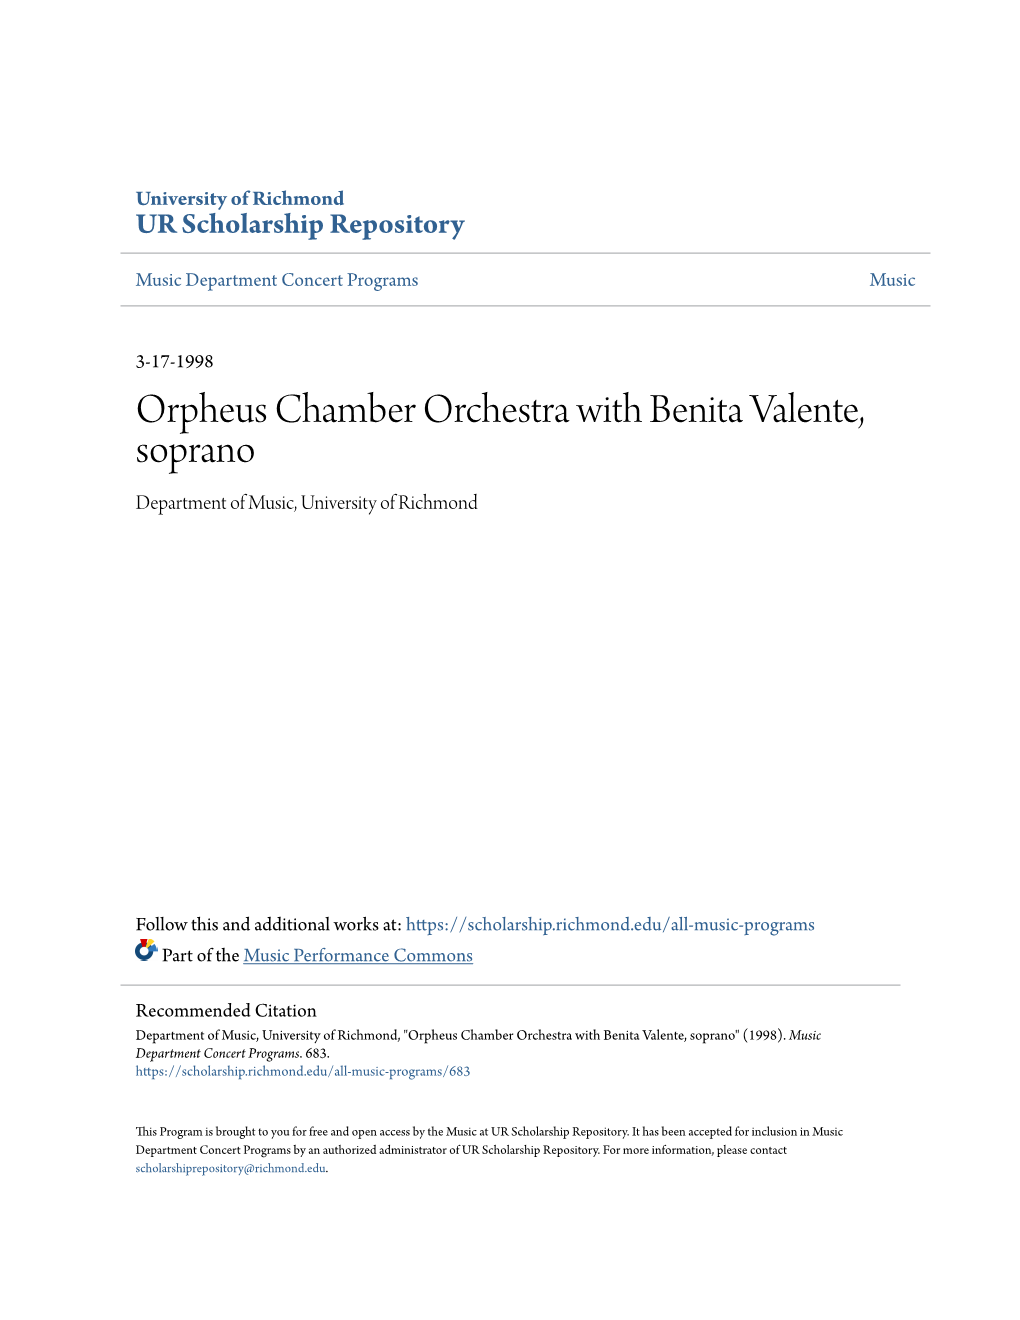 Orpheus Chamber Orchestra with Benita Valente, Soprano Department of Music, University of Richmond